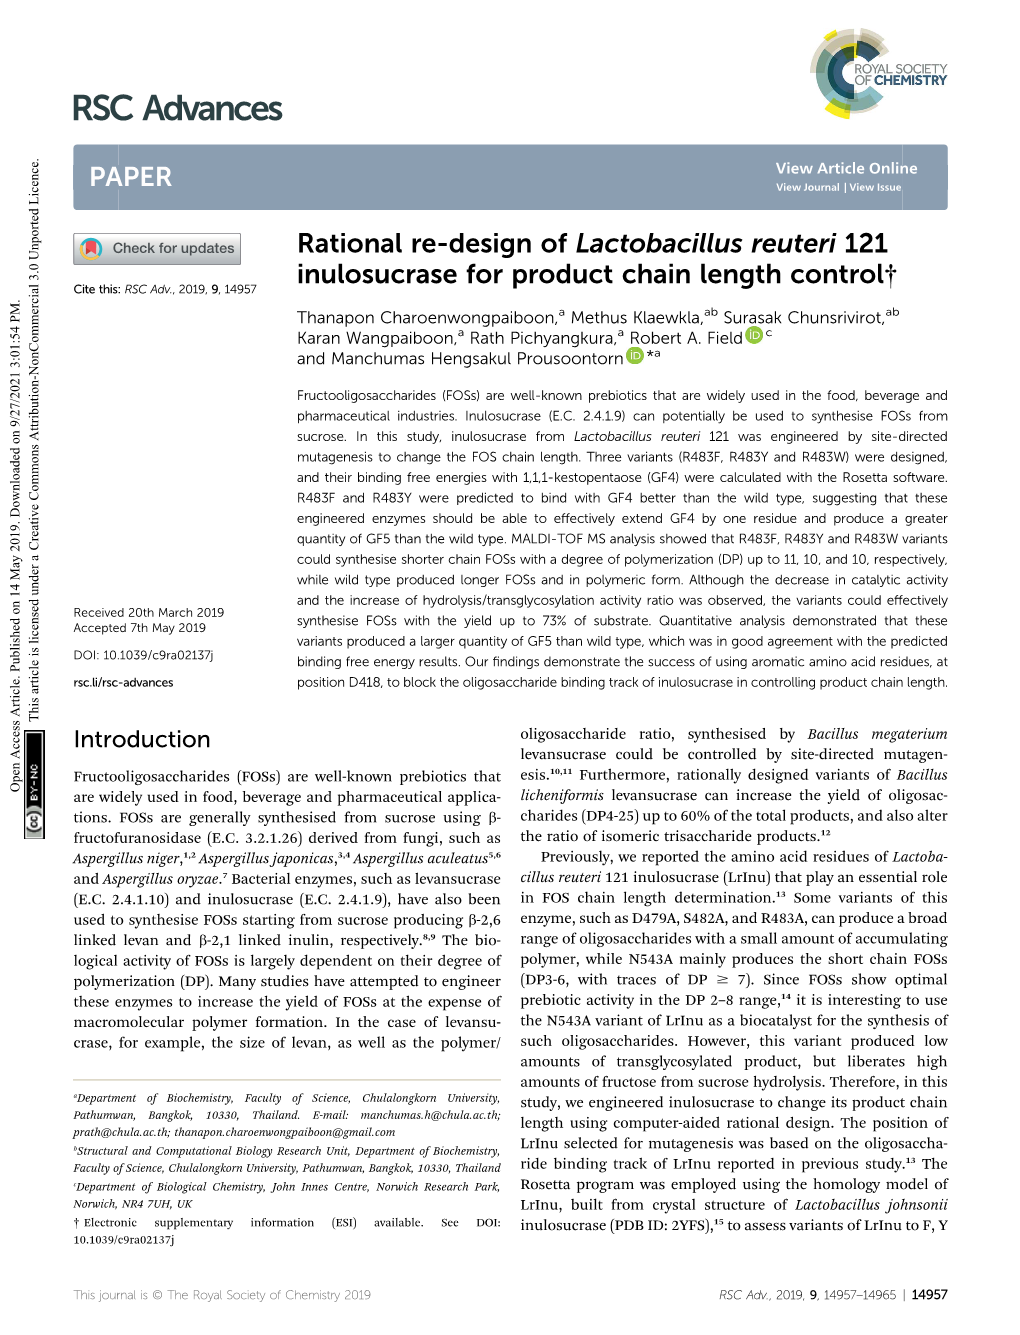 Rational Re-Design of Lactobacillus Reuteri 121 Inulosucrase for Product